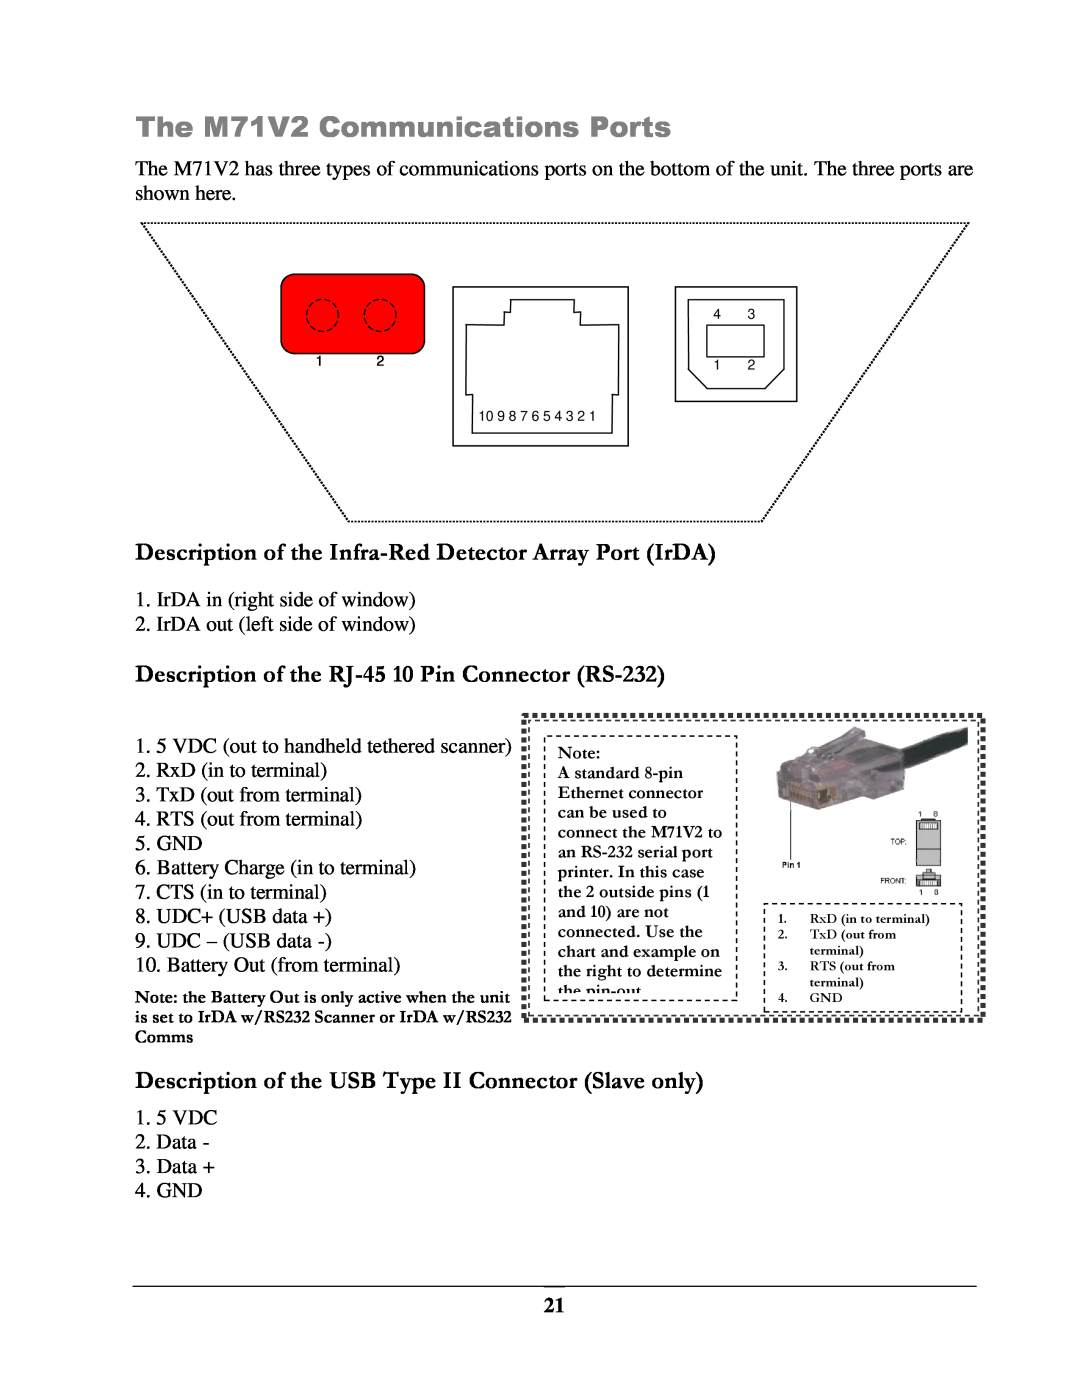 IBM manual The M71V2 Communications Ports, Description of the Infra-Red Detector Array Port IrDA 